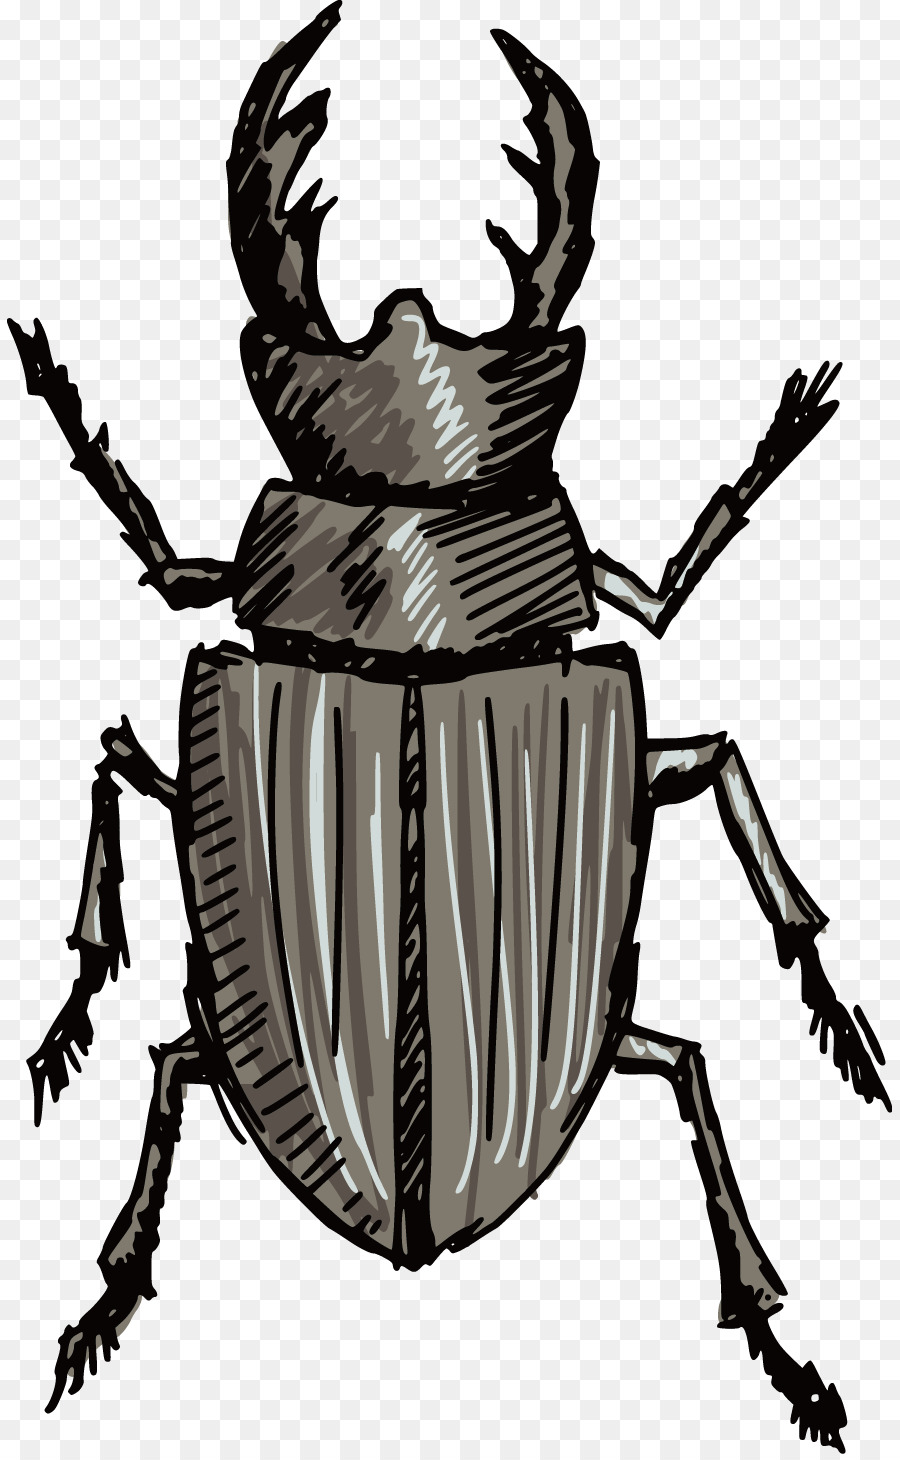 Volkswagen Beetle Stag beetle Silhouette - Scorpion Vector png download - 885*1454 - Free Transparent Beetle png Download.